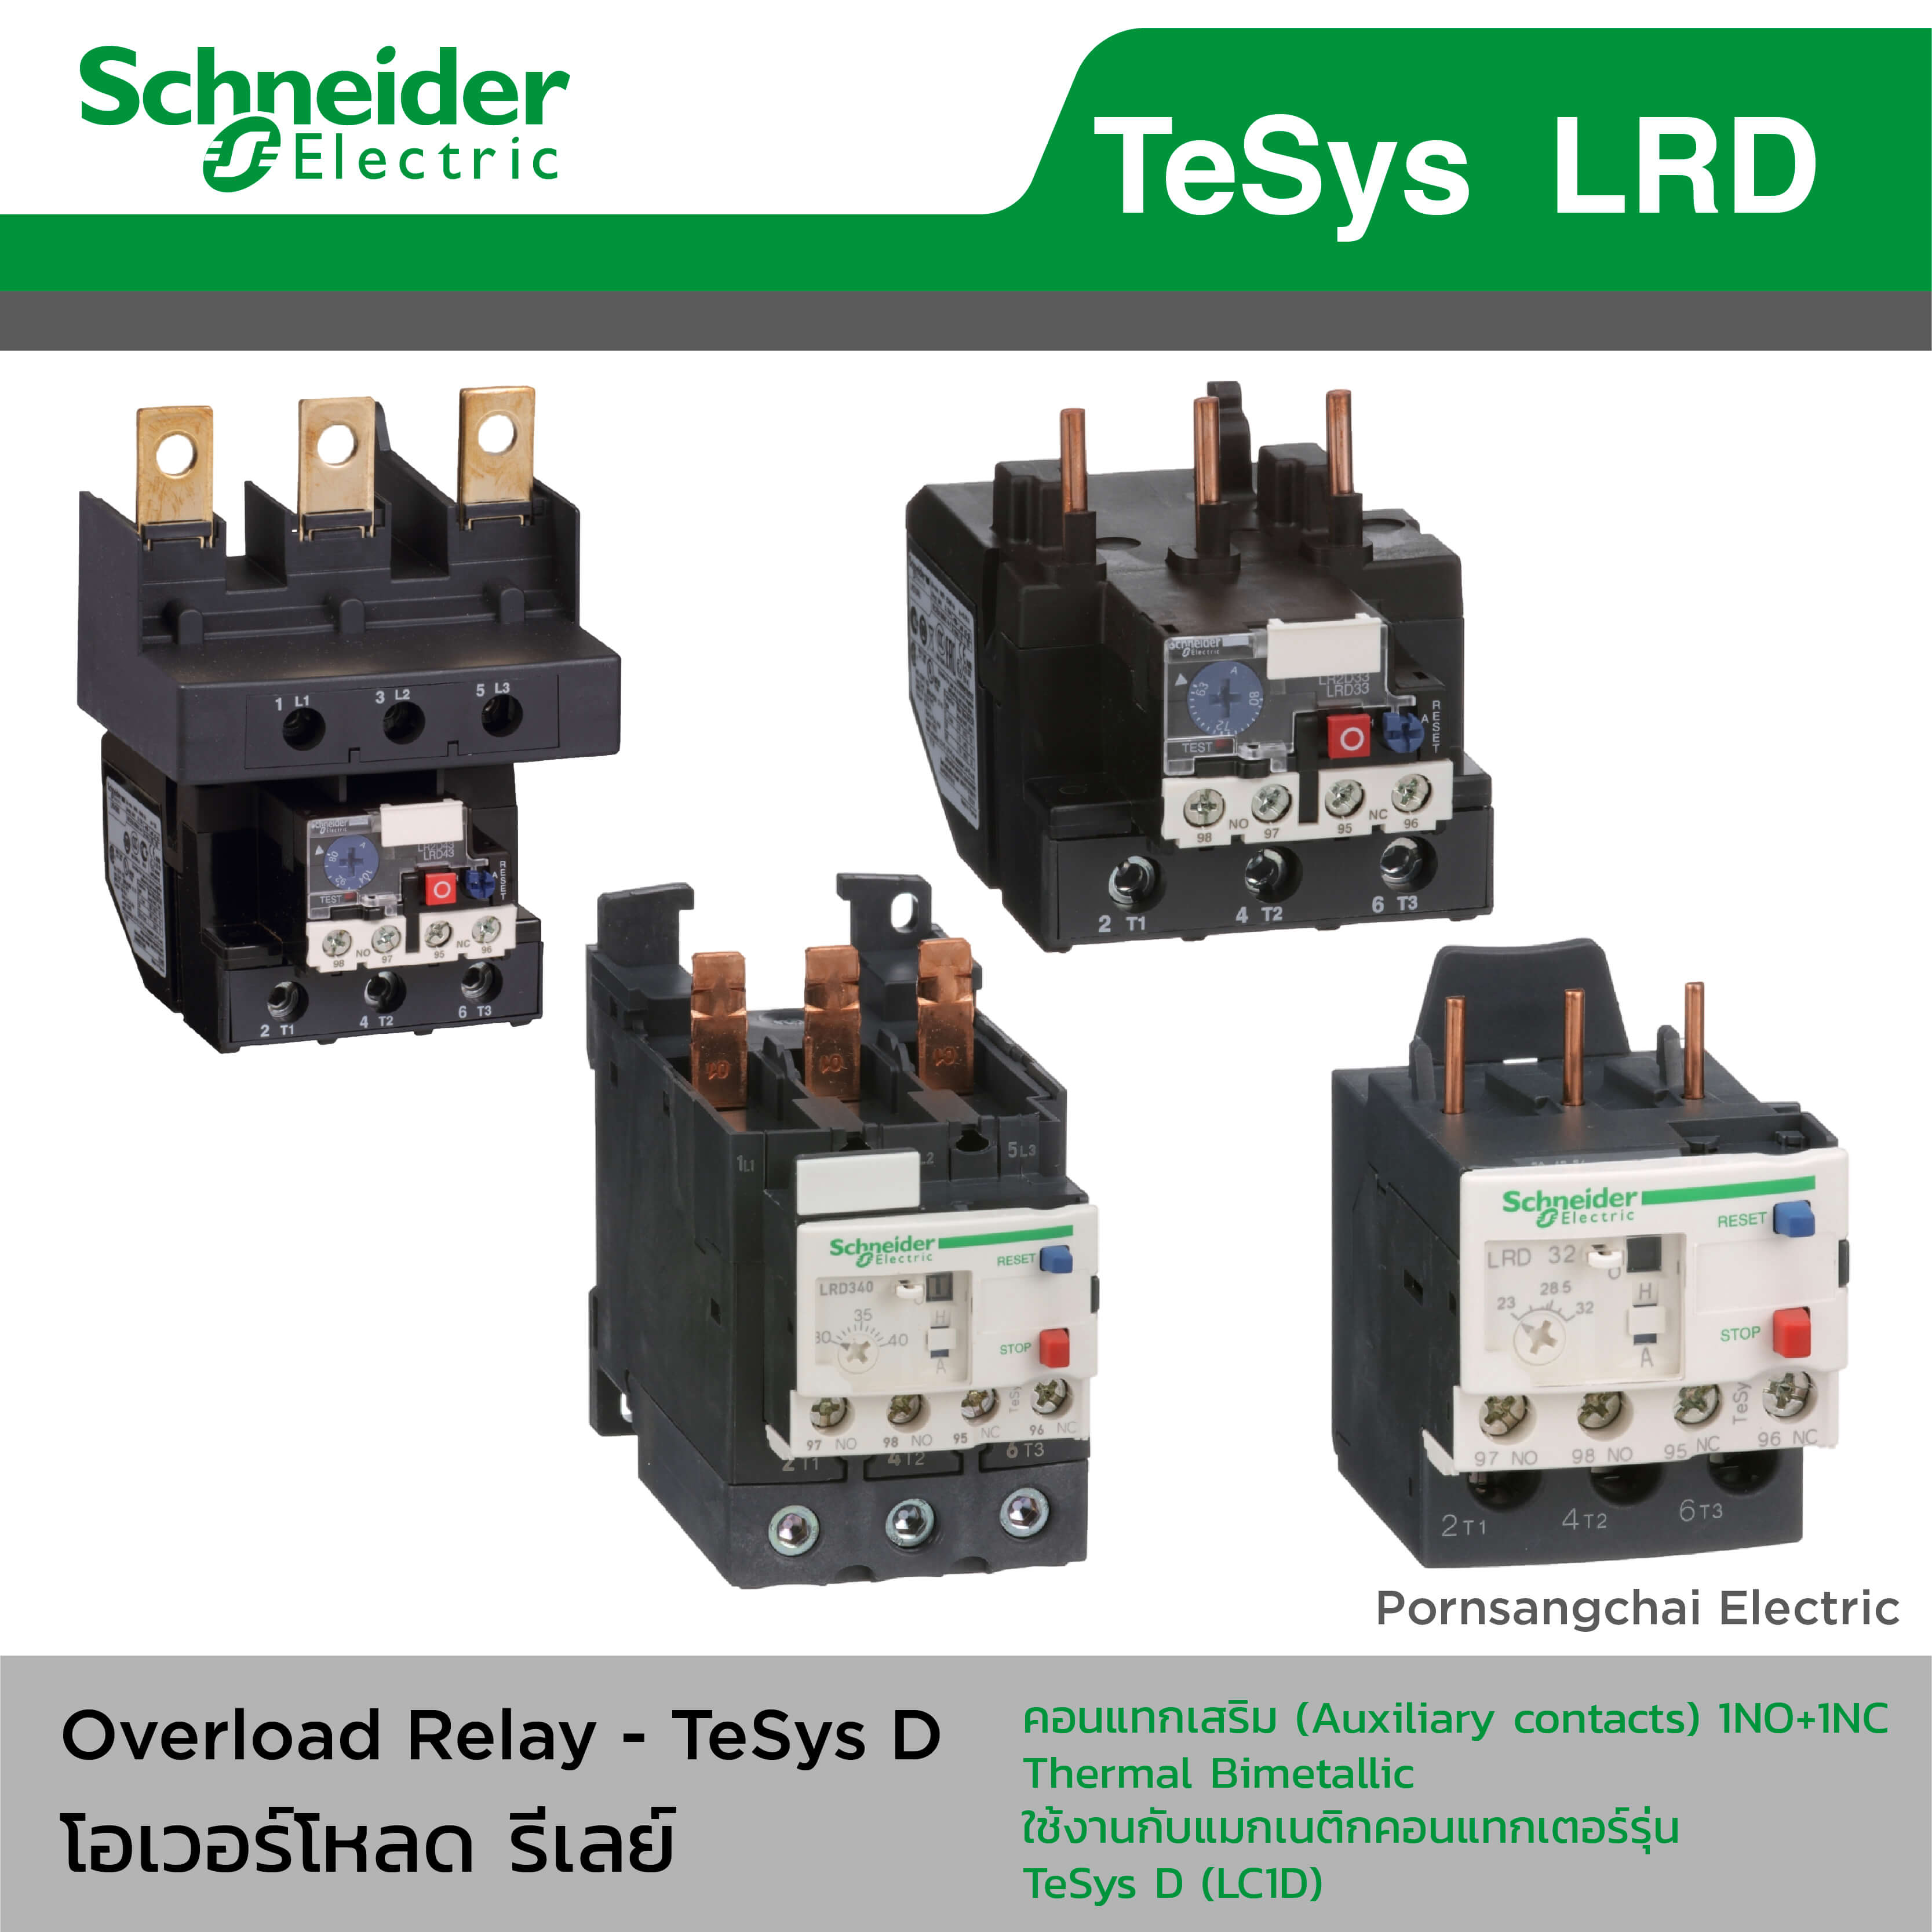 Schneider (Overload Relay) โอเวอร์โหลดรีเลย์ - TeSys LRD